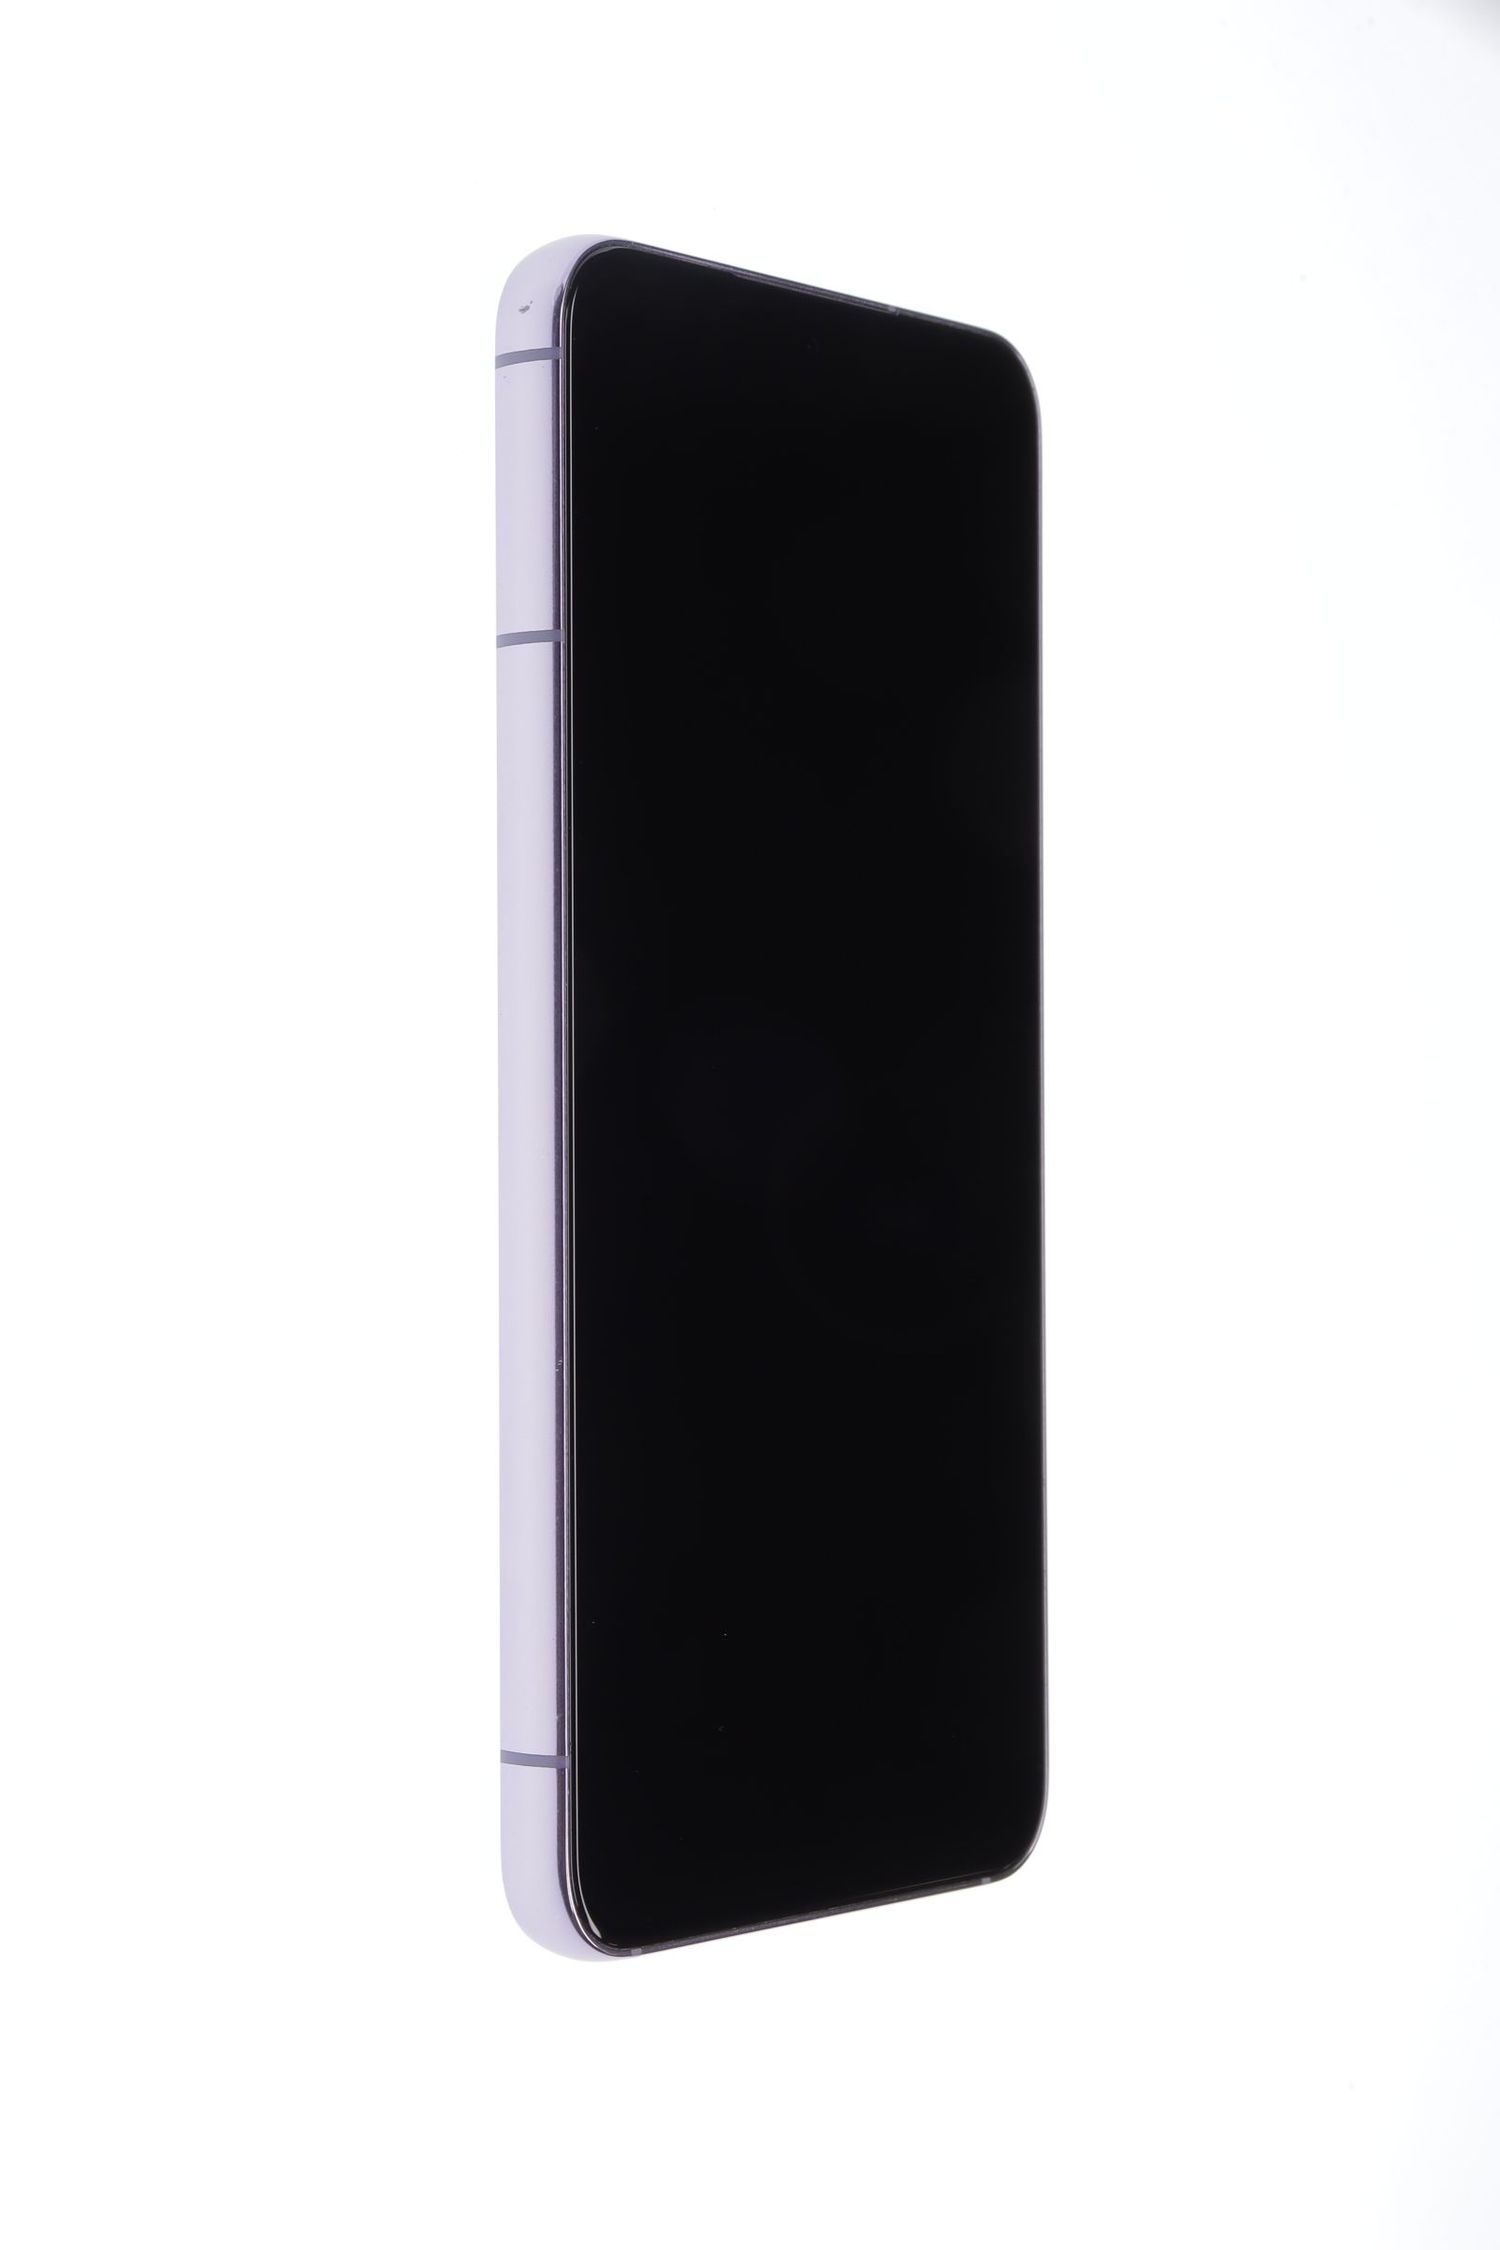 Мобилен телефон Samsung Galaxy S22 5G Dual Sim, Bora Purple, 256 GB, Foarte Bun